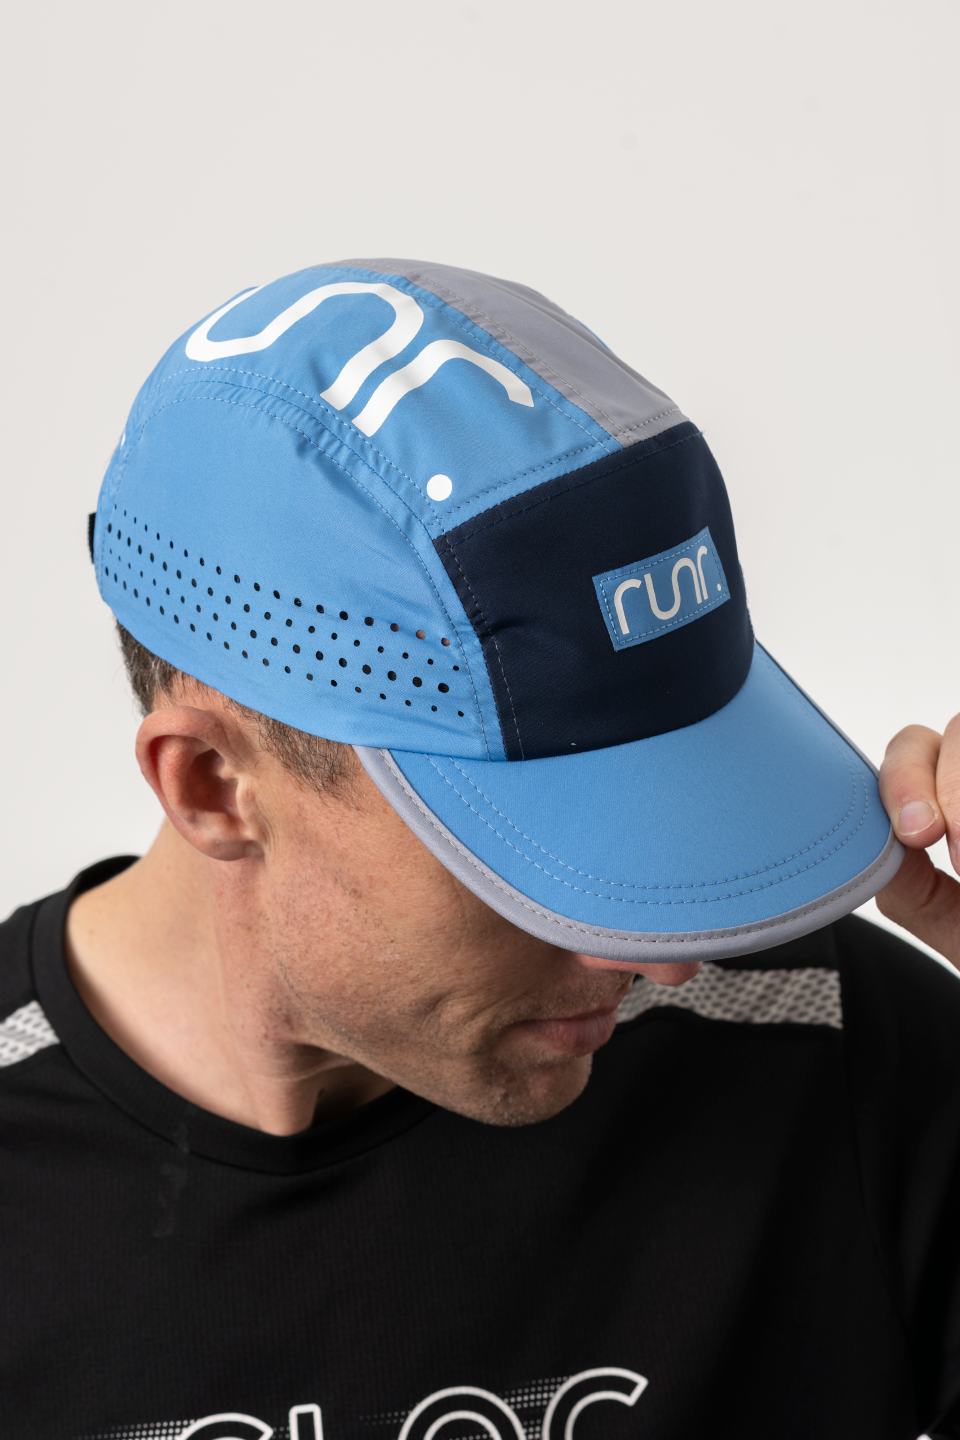 Runr Montreal Technical Running Hat